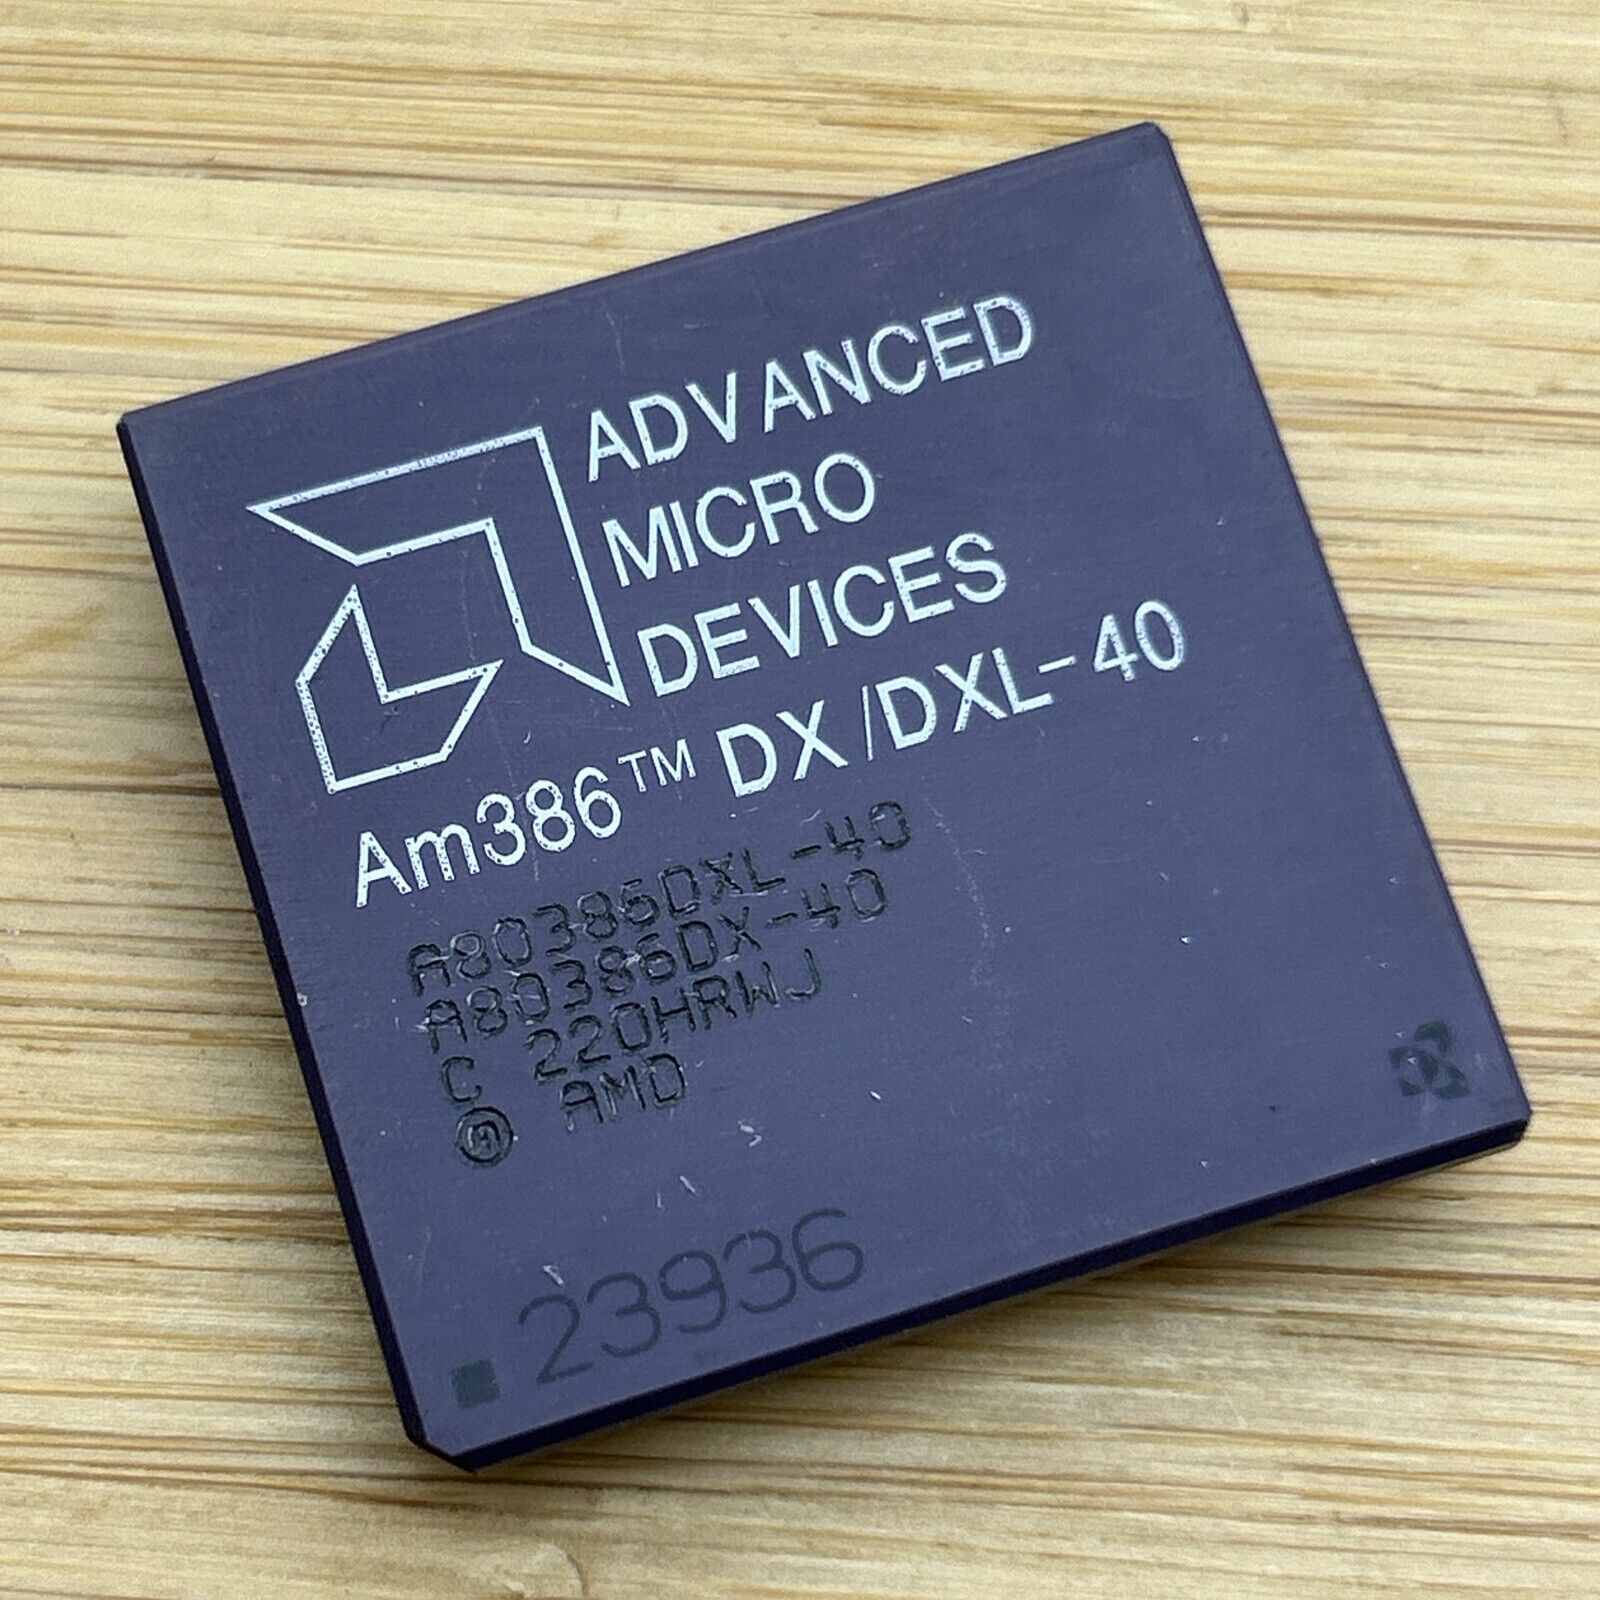 AMD 386 DX-40 80386 Am386DX-40 DX/DXL-40 PGA CPU Rare Vintage Processor Am386